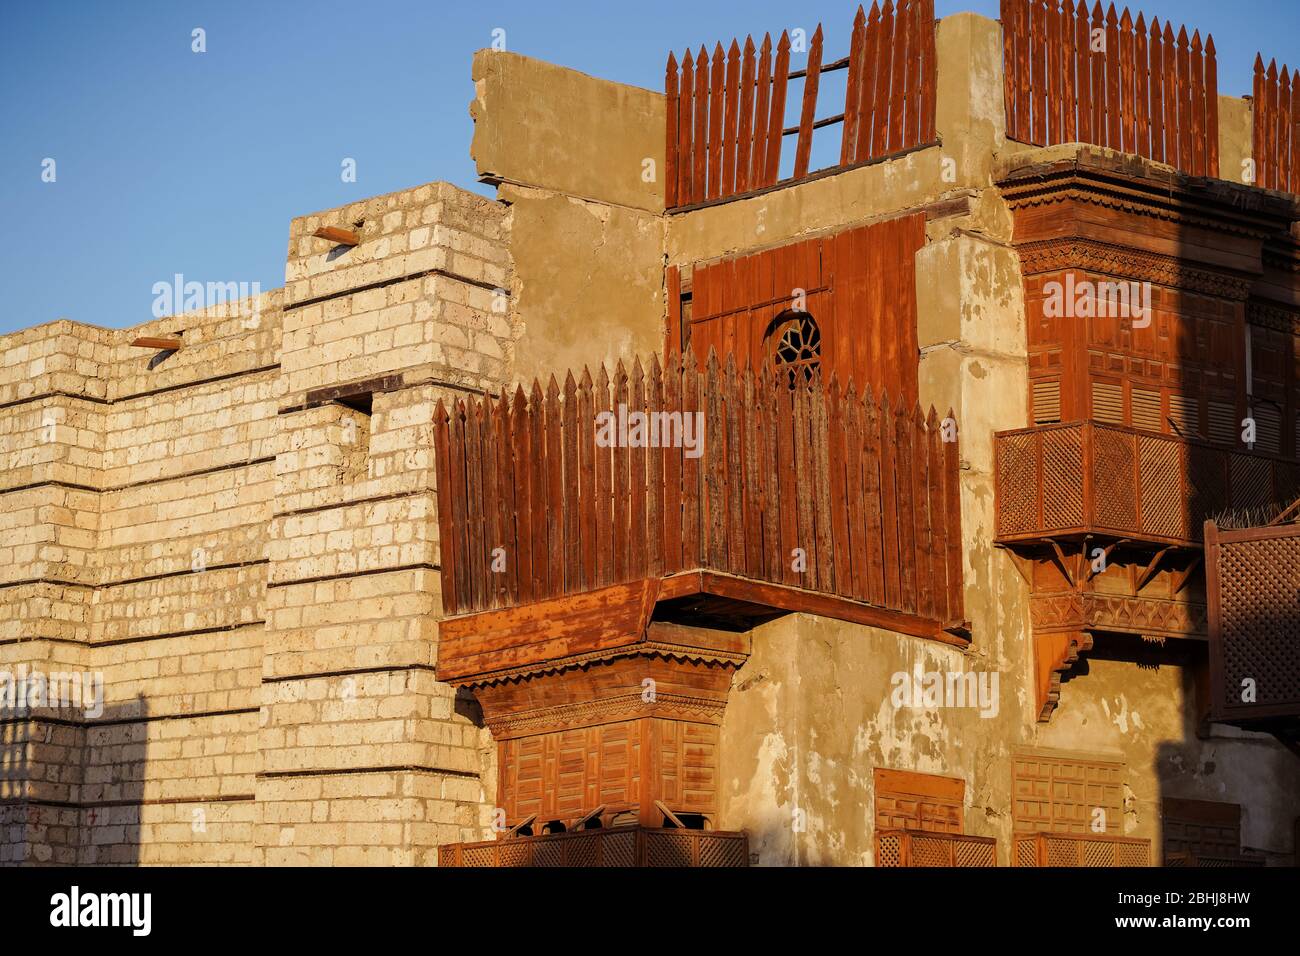 Historic wooden building in the UNESCO historic center called Al-Balad, Jeddah, Saudi Arabia Stock Photo